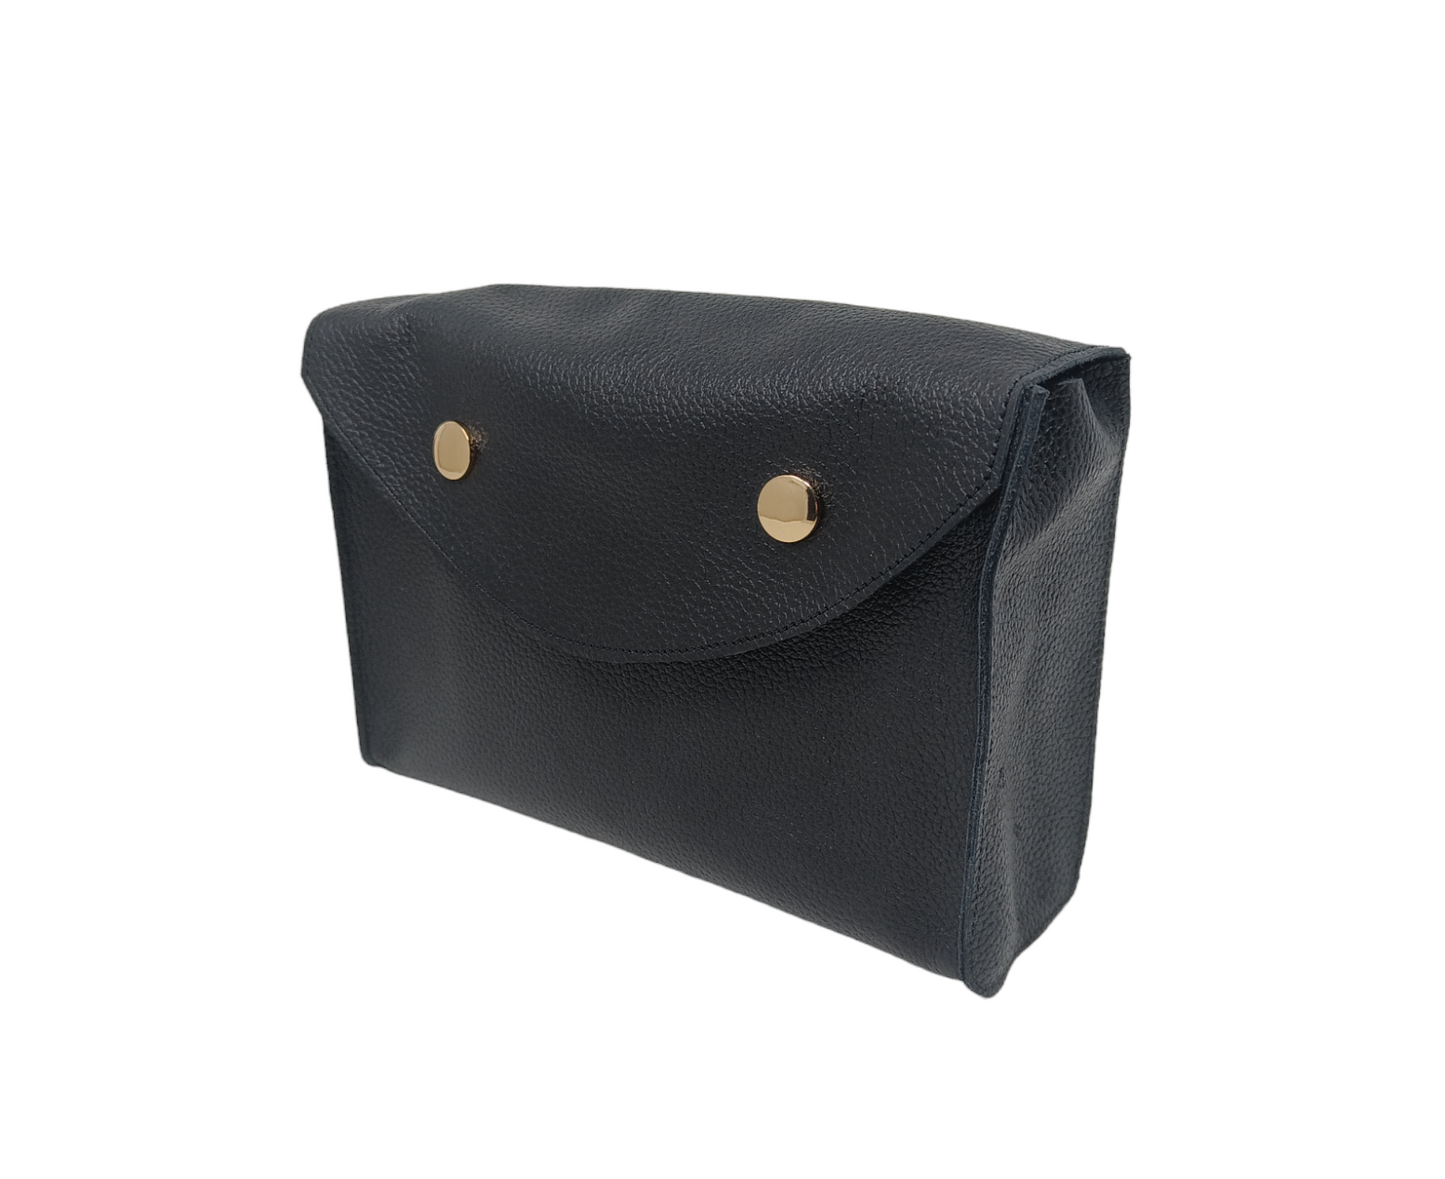 Ready to ship, Medium size black leather missal/book pouch, leather book bag, leather cover pouch